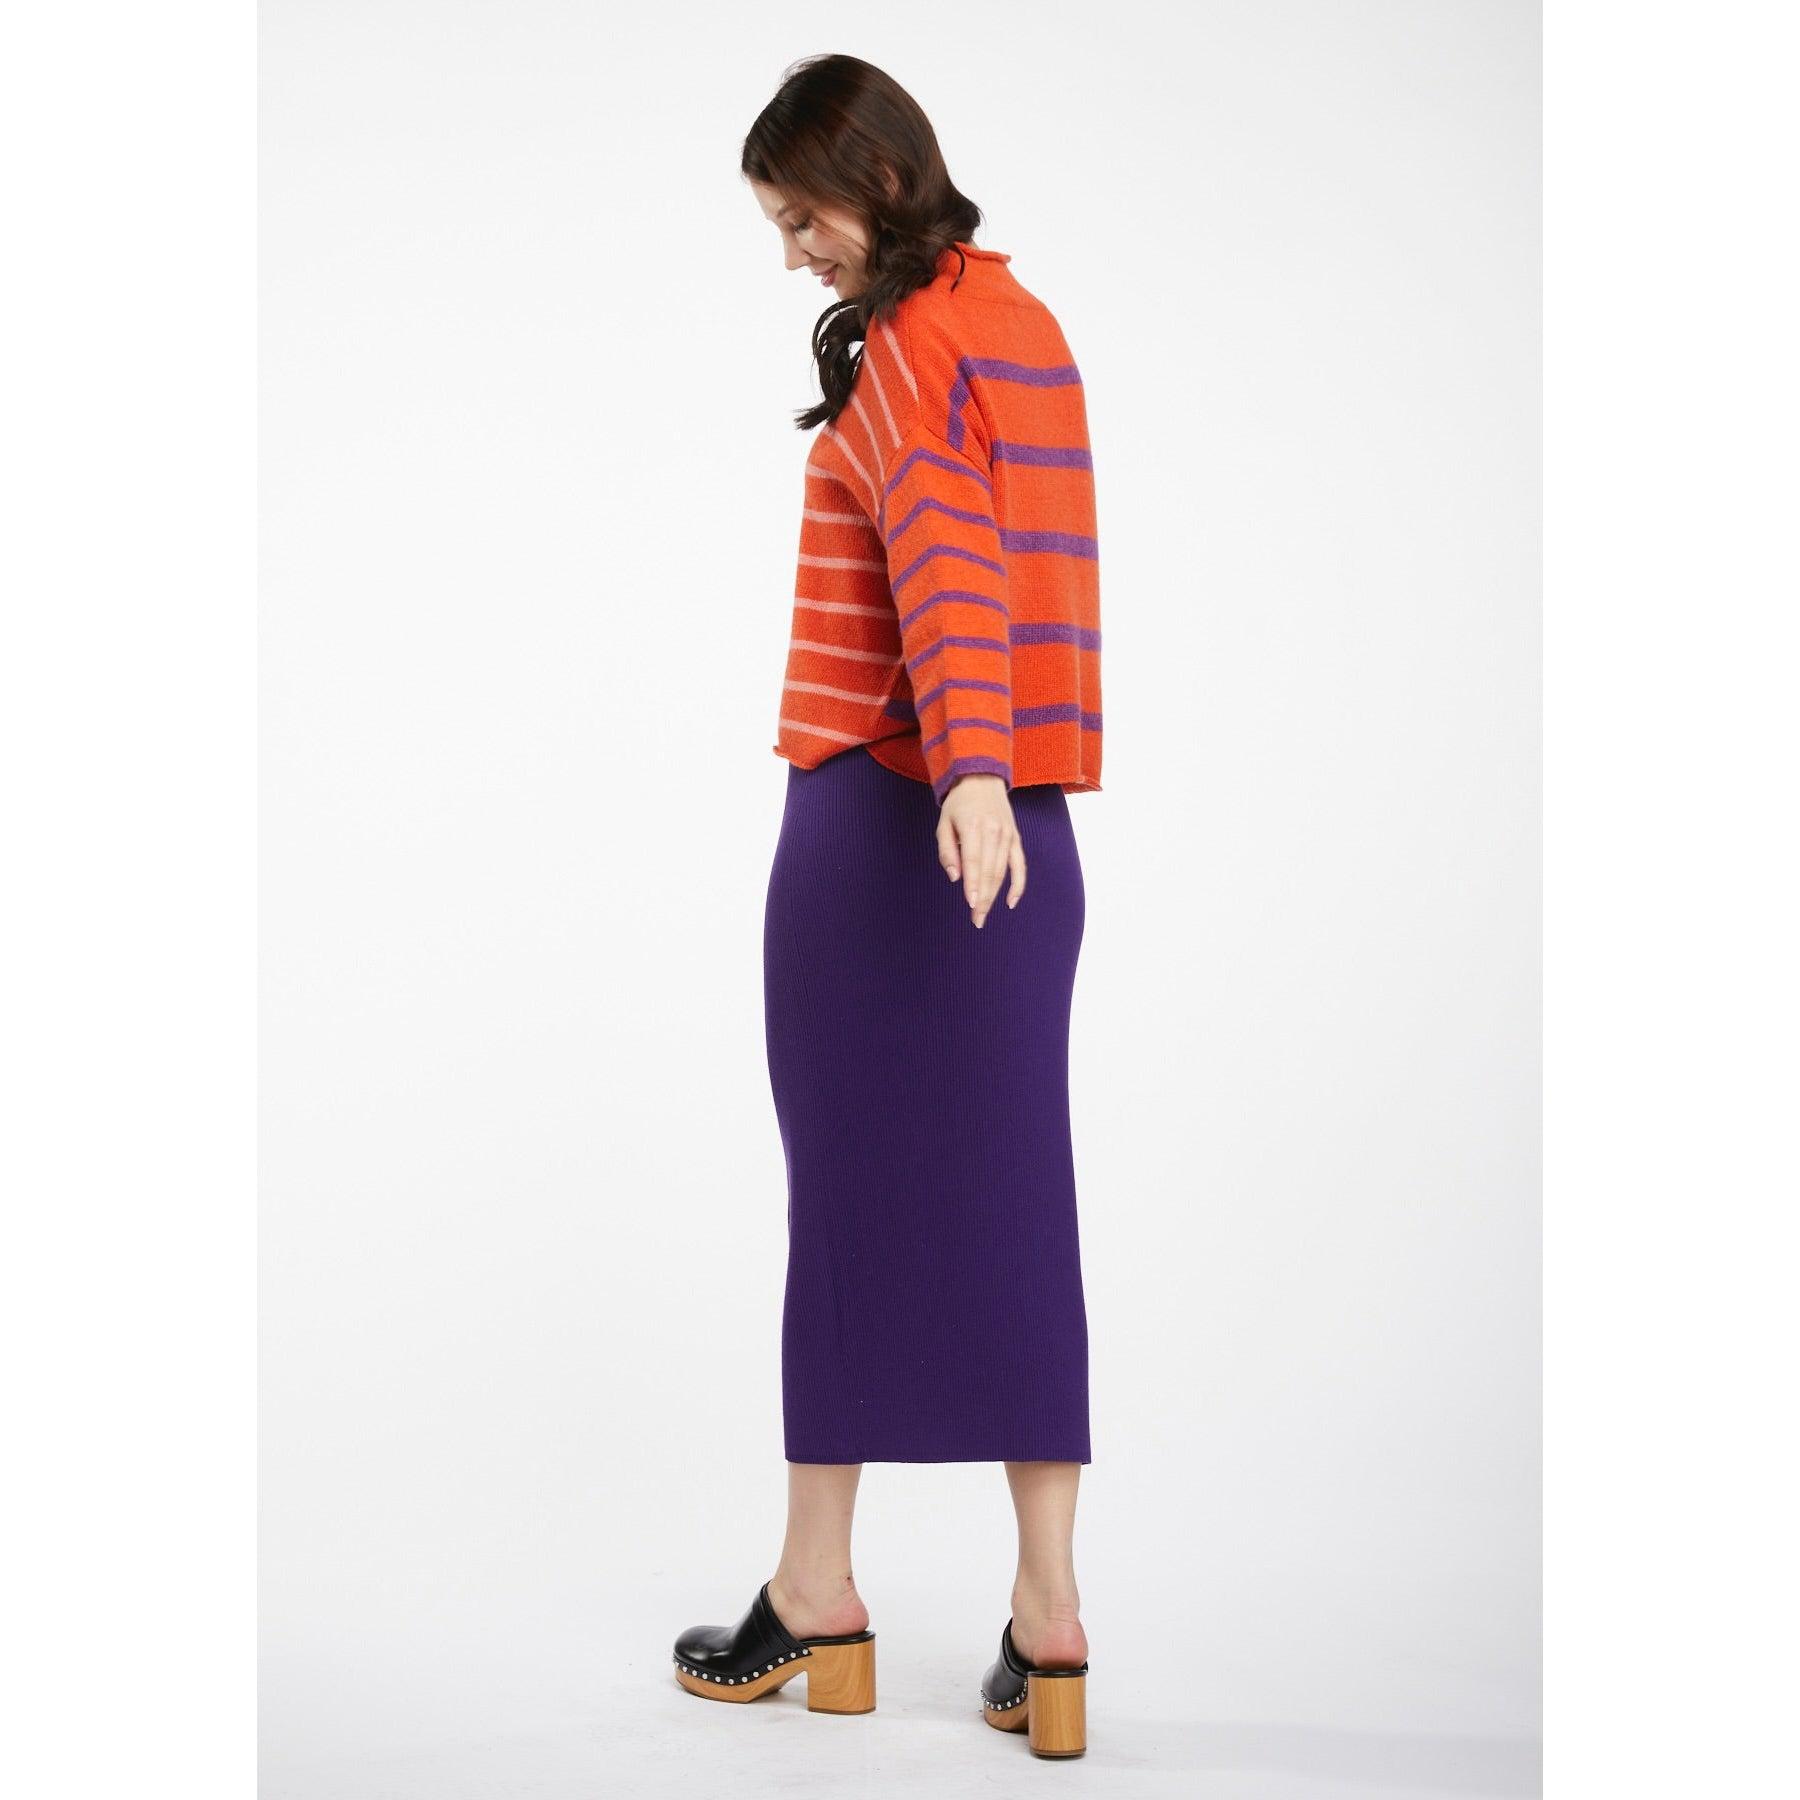 LD & Co Alternate Stripe Orange-Knitwear-LD & Co-Après-She